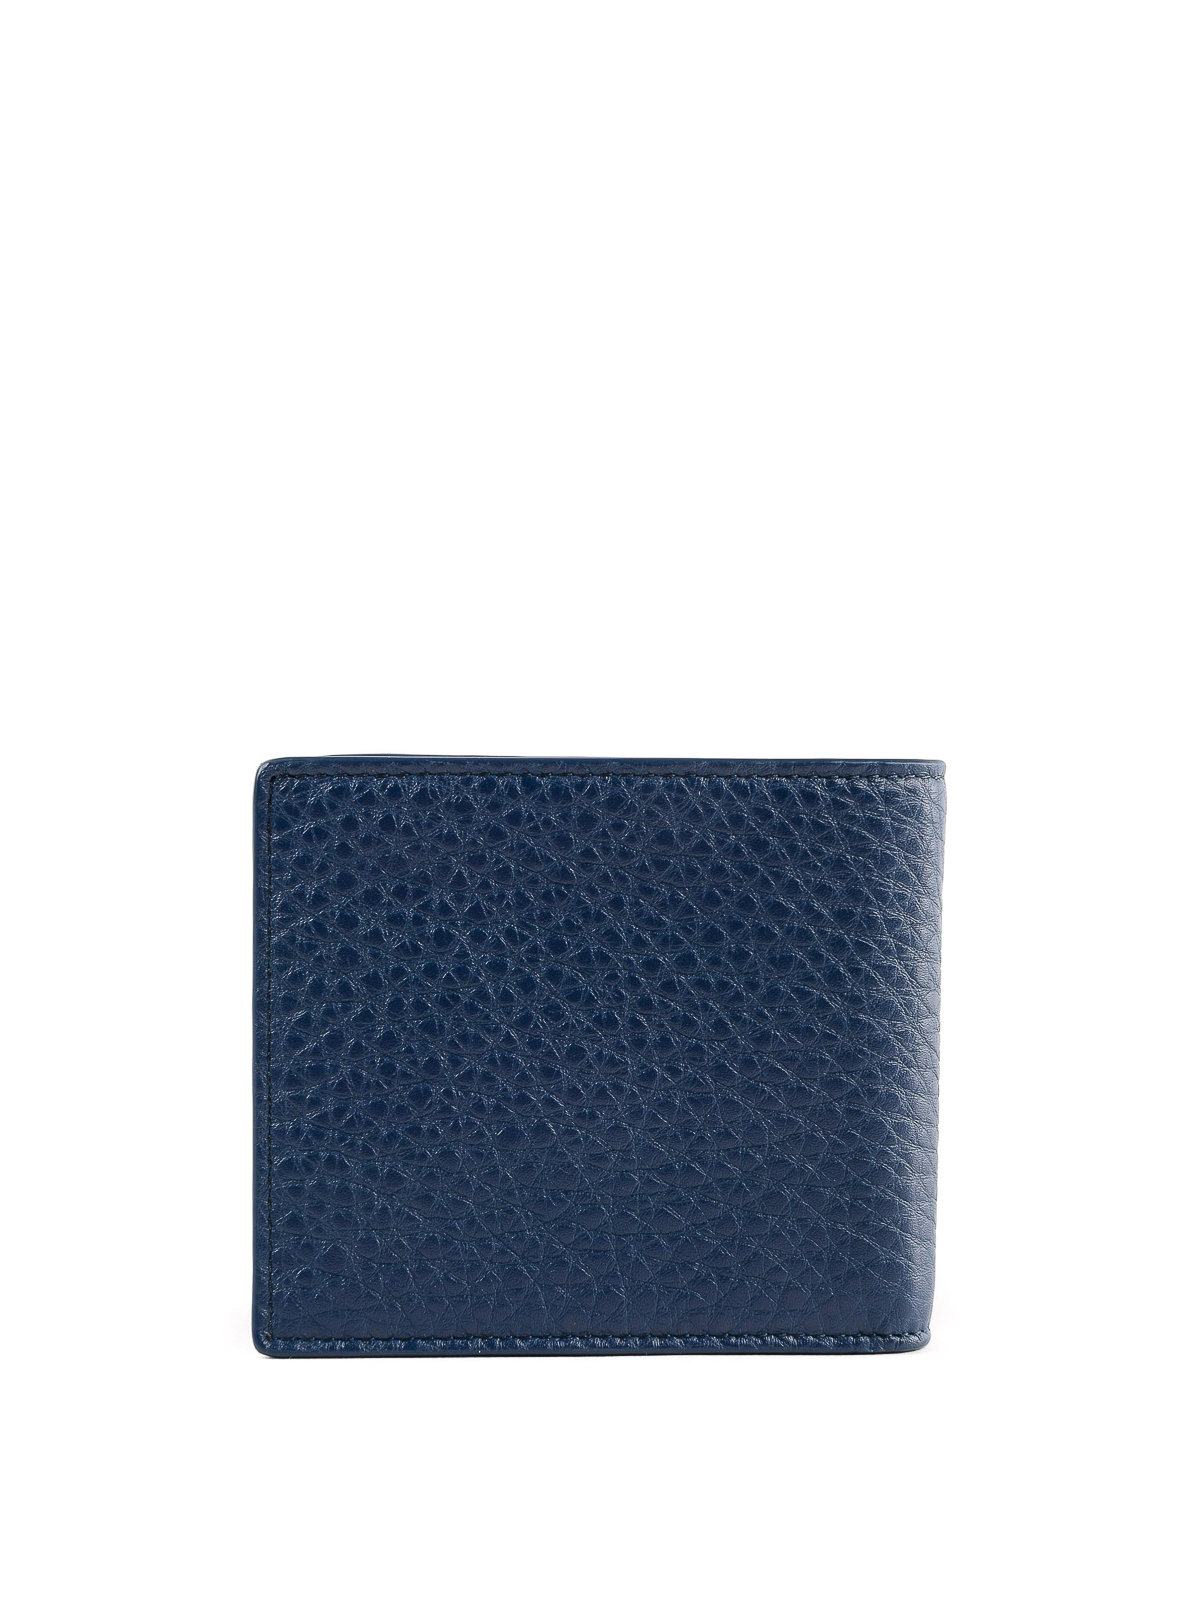 Wallets & purses Fendi - Fendi Roma grainy leather billfold wallet ...